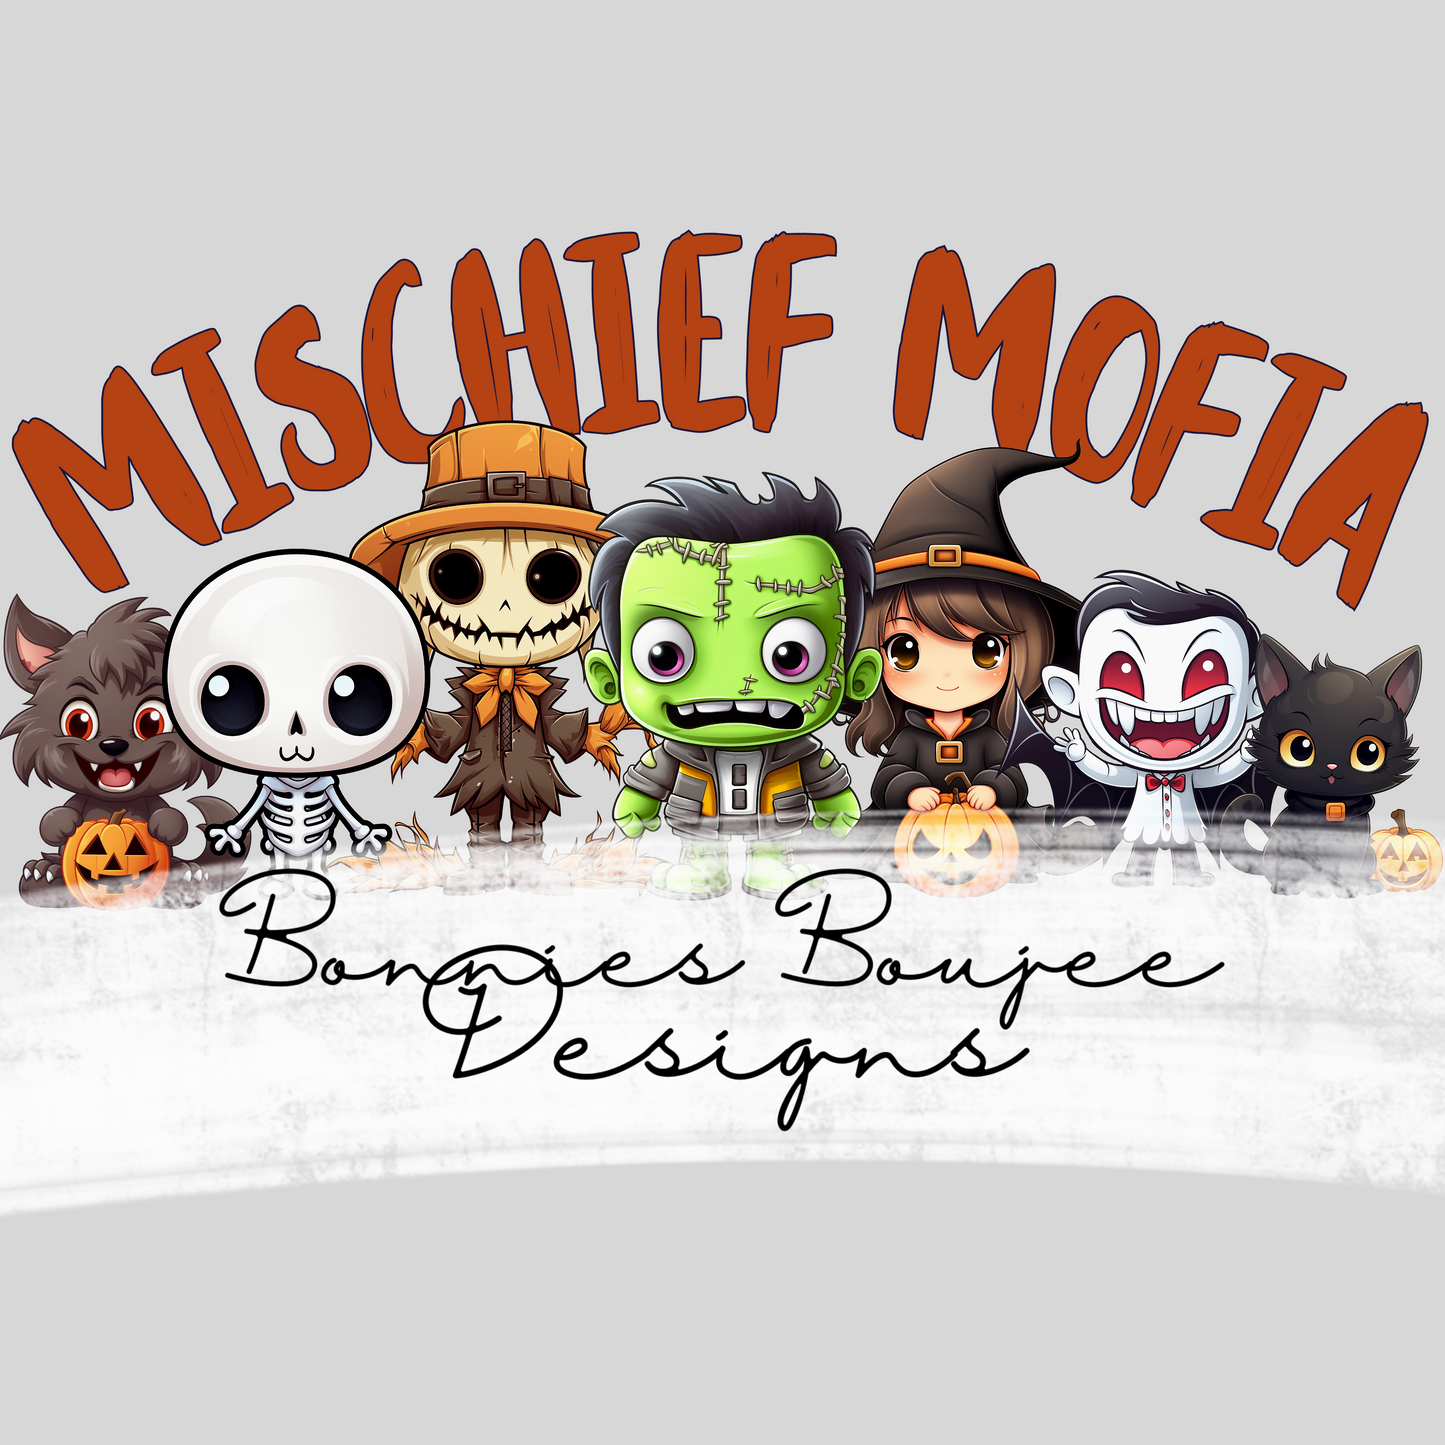 Halloween Monster Icons Bundle Purchase